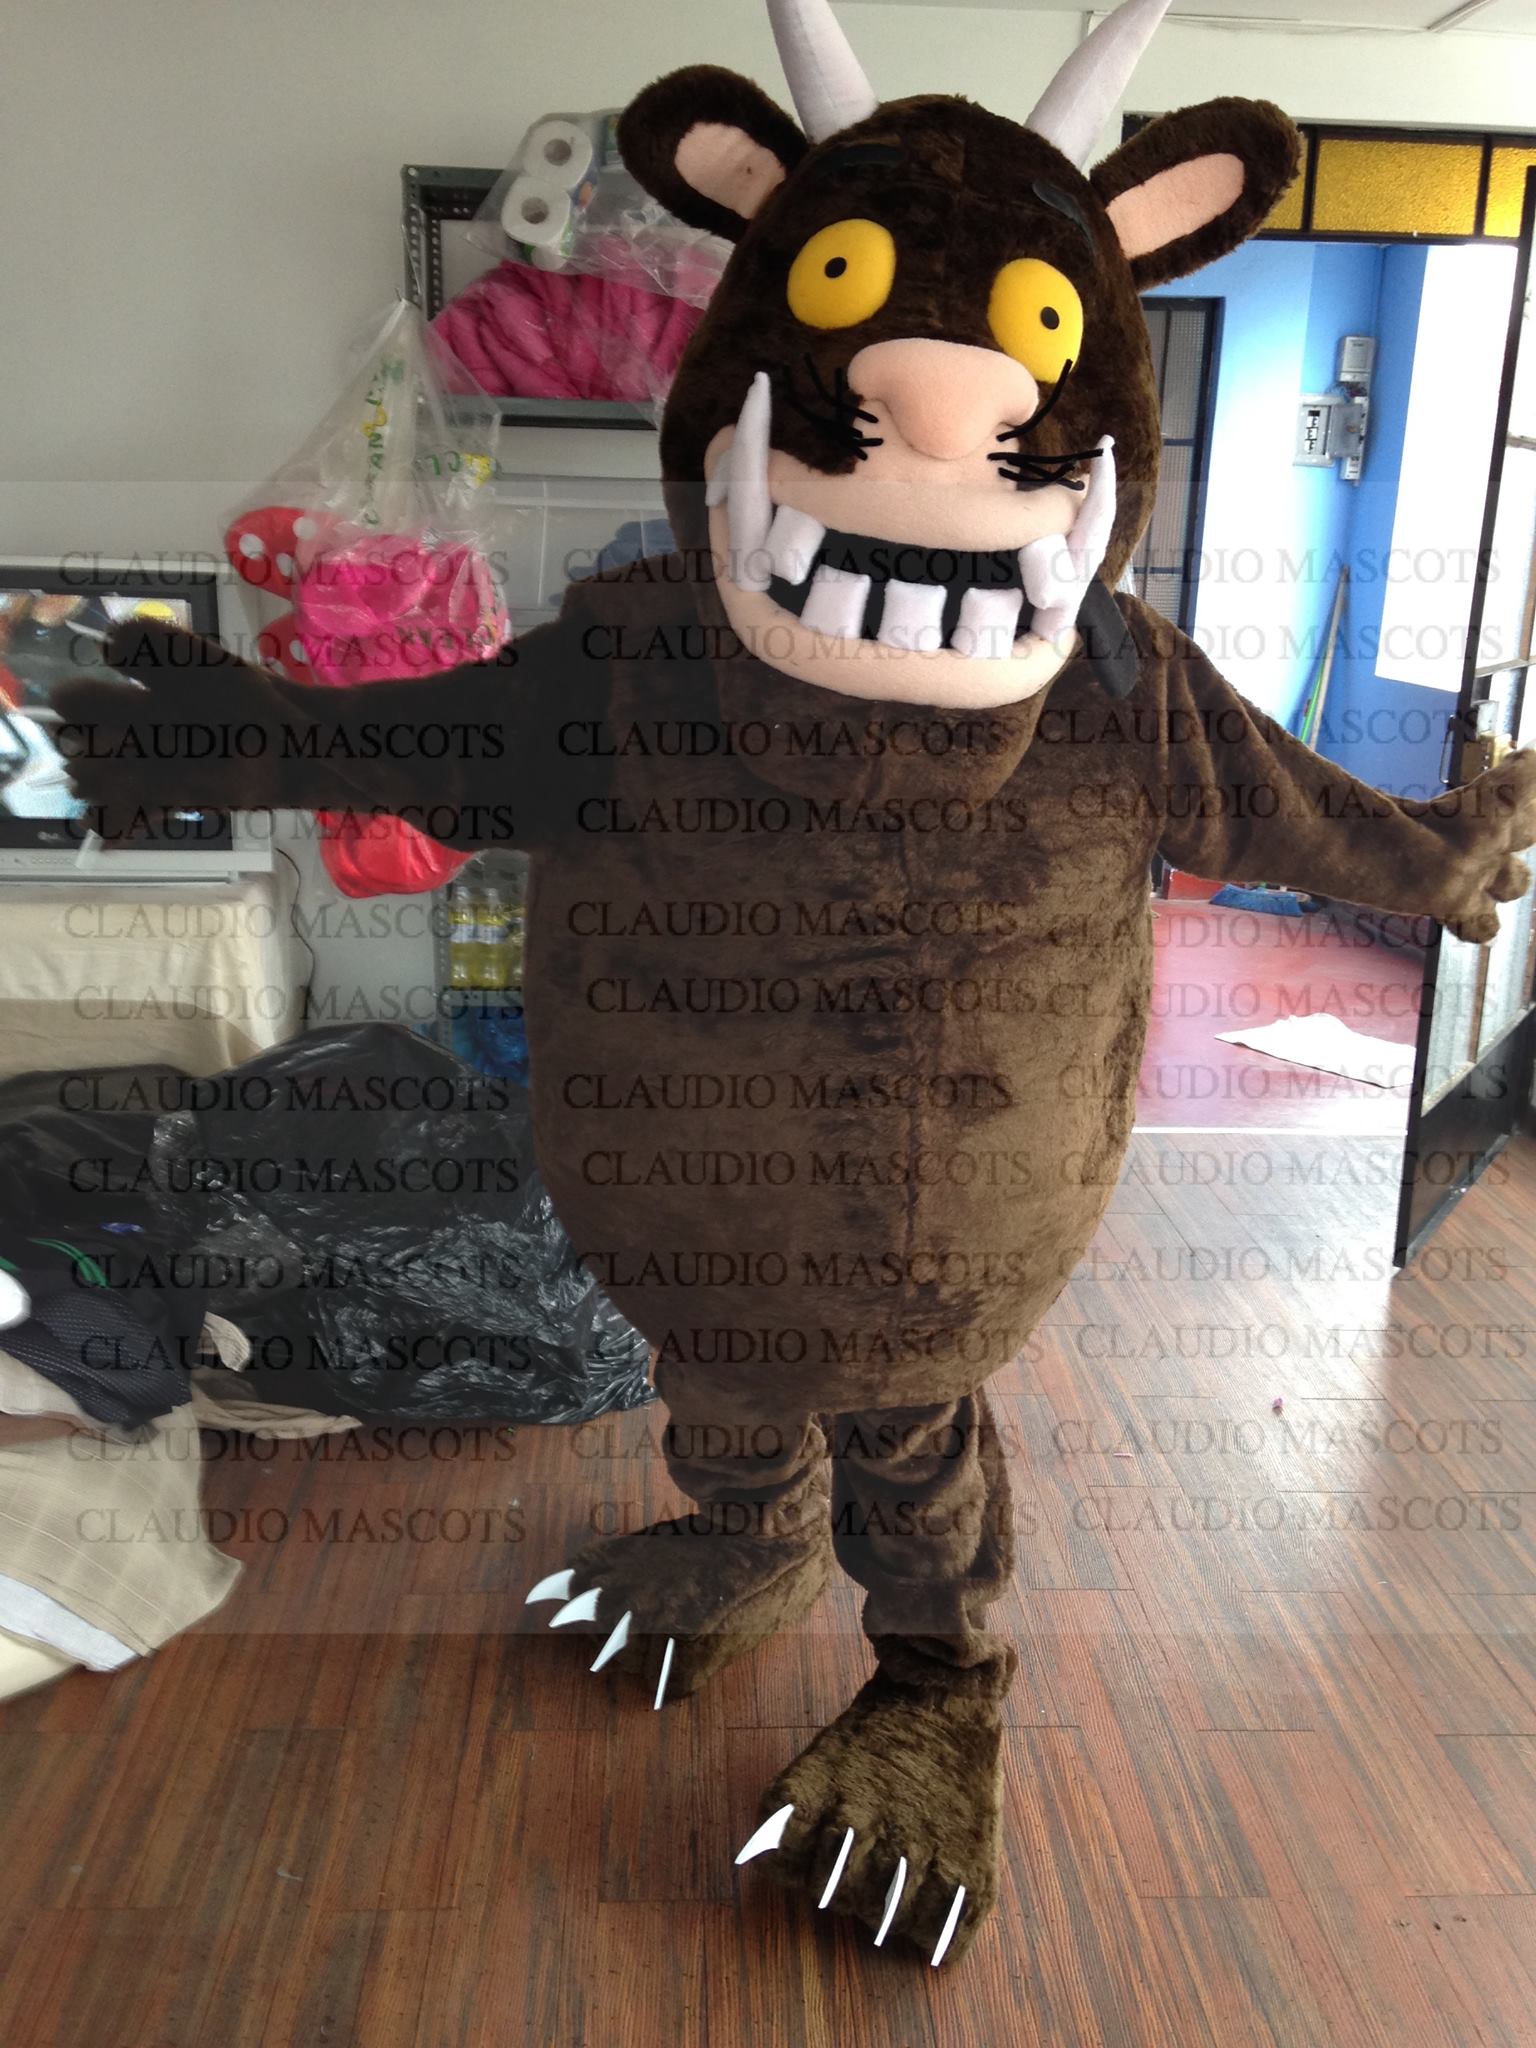 Gruffalo - Event Mascots Costume Hire1536 x 2048